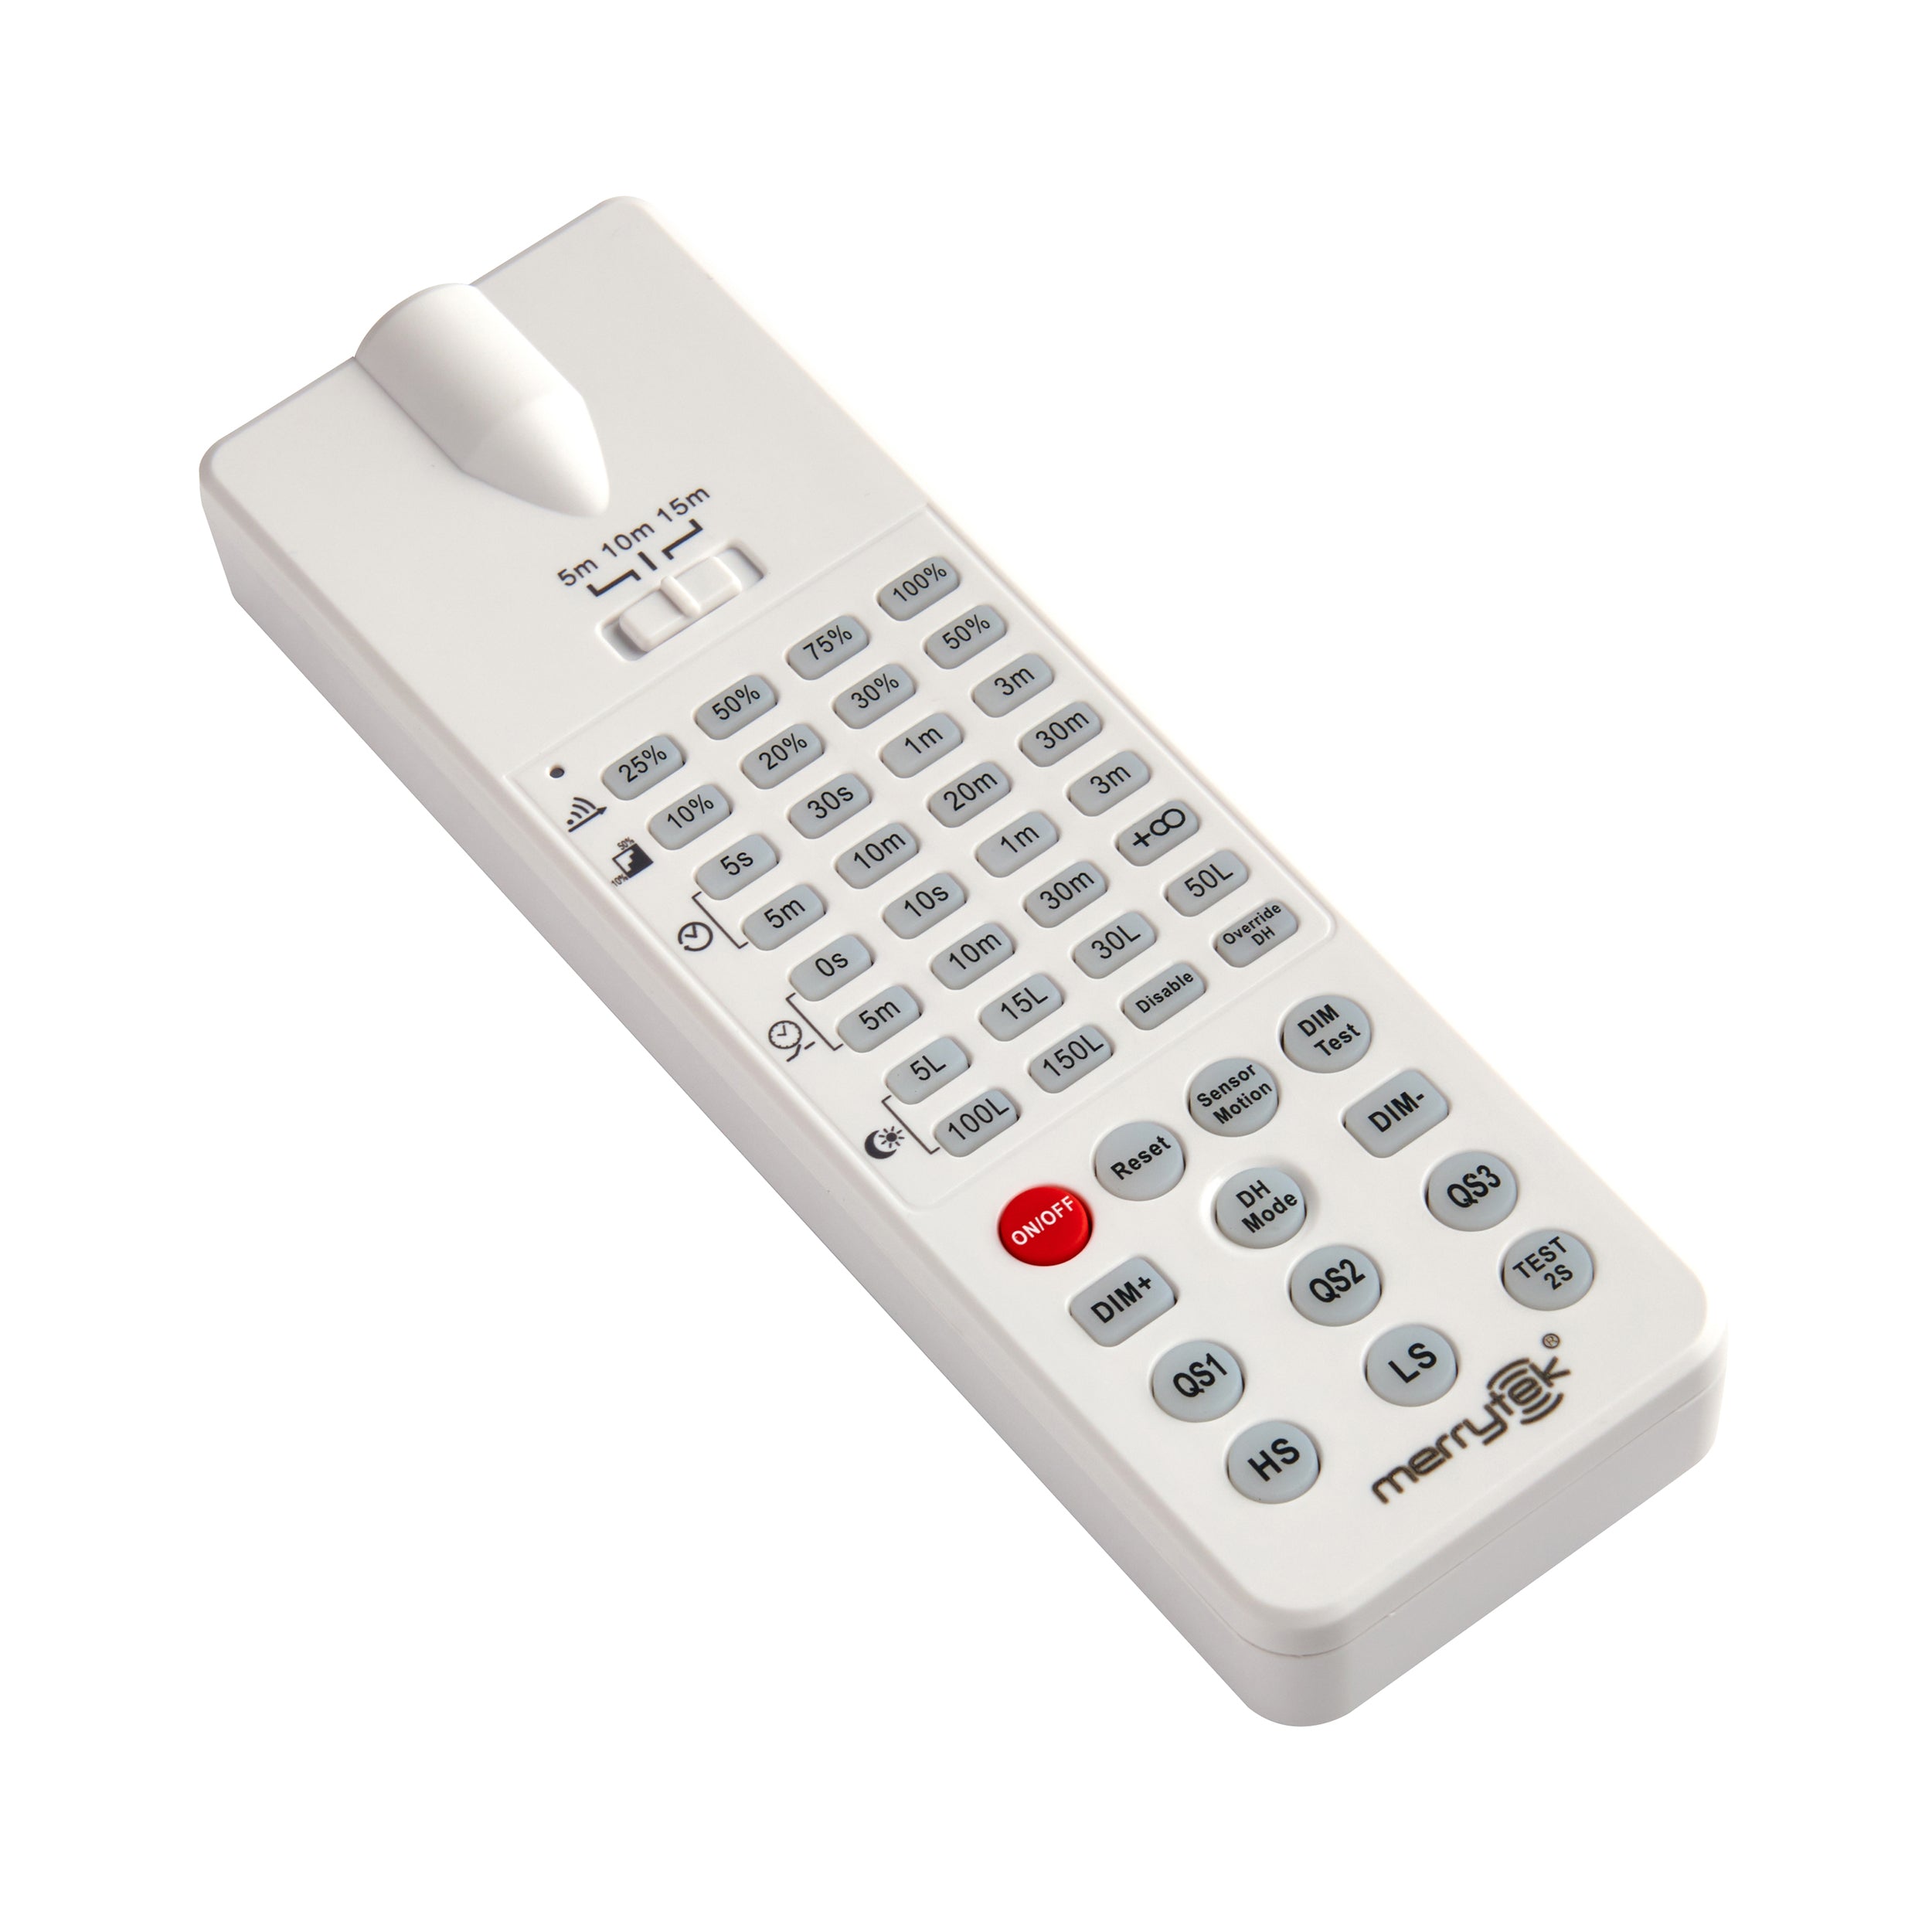 Saxby Lighting Altum remote control 78774